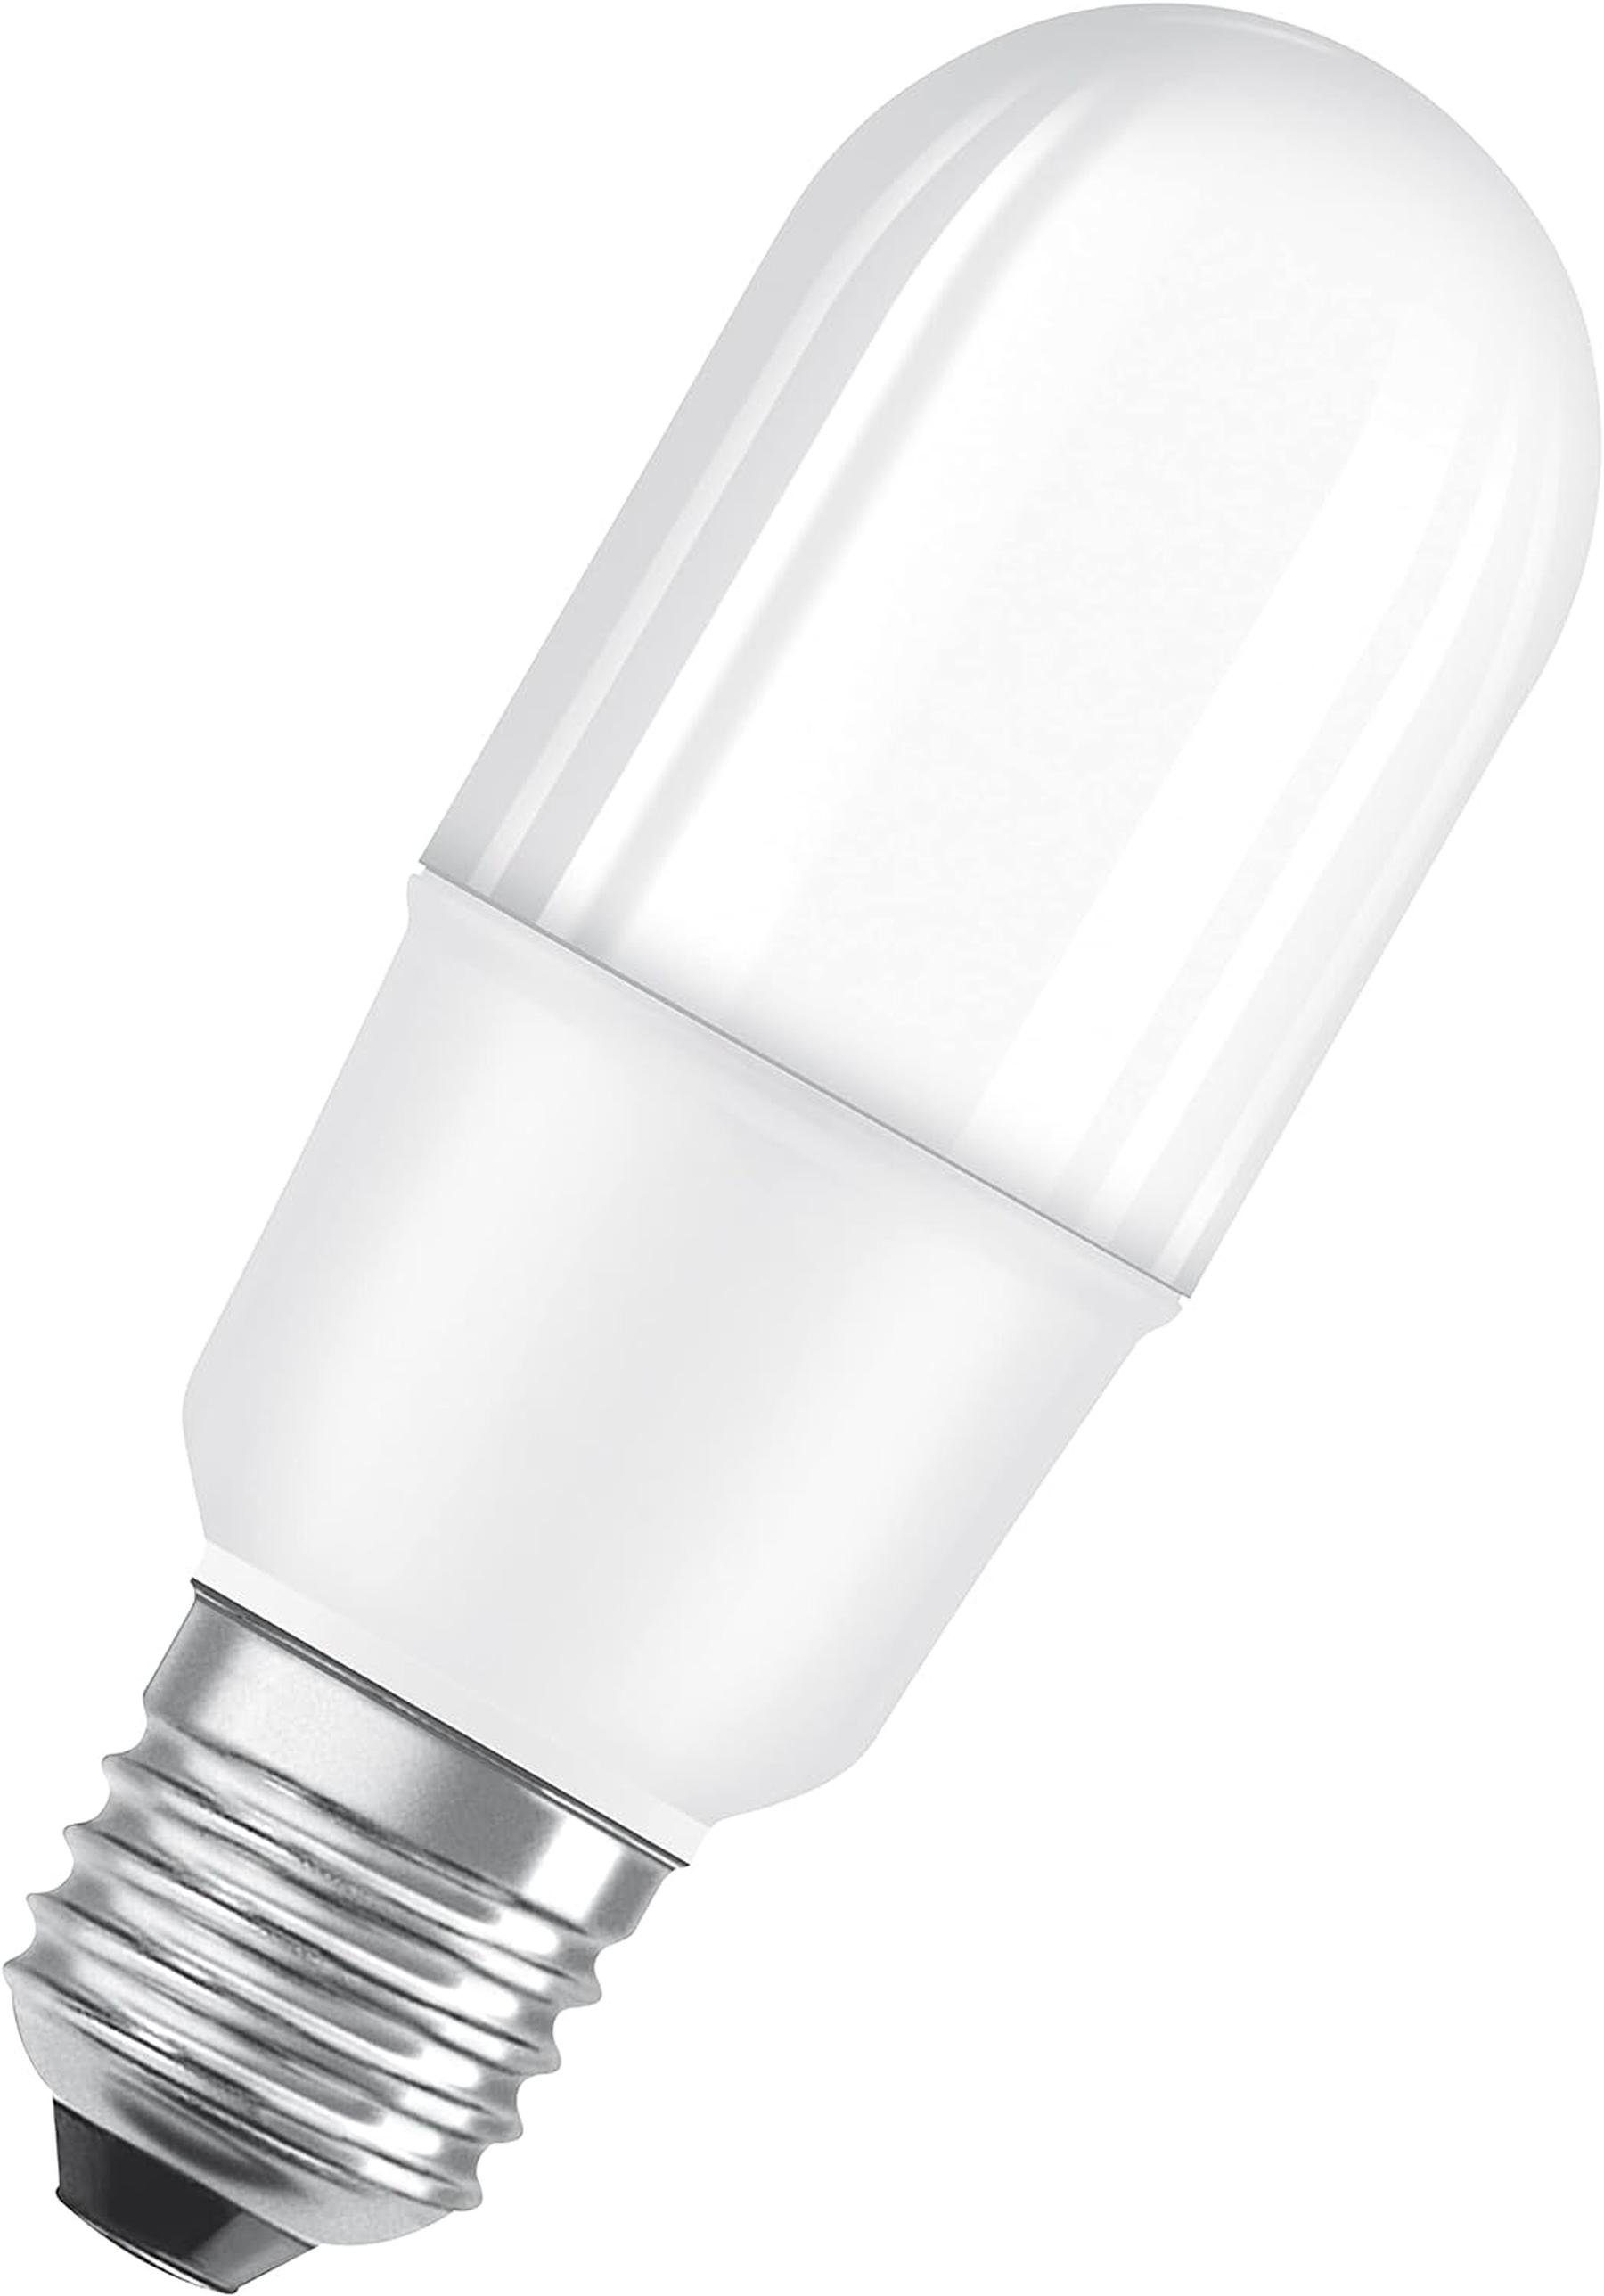 Osram LED-Leuchtmittel OSRAM Superstar dimmbare E27 Lampe, E27, LED Warmweiß